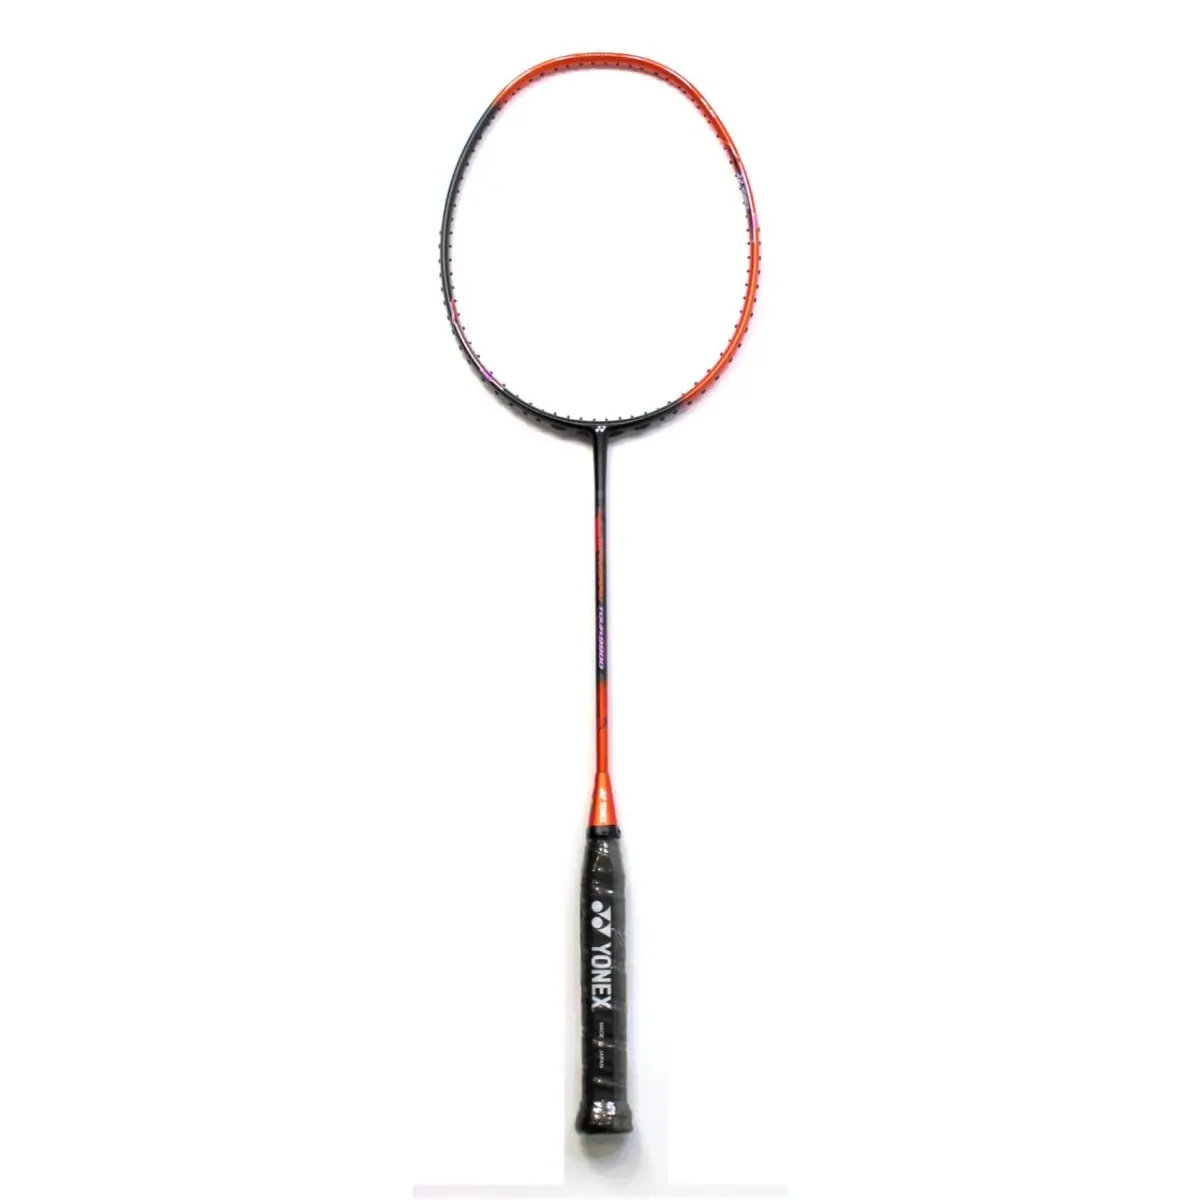 Buy Yonex Nanoray 9900 Tour Badminton Racket